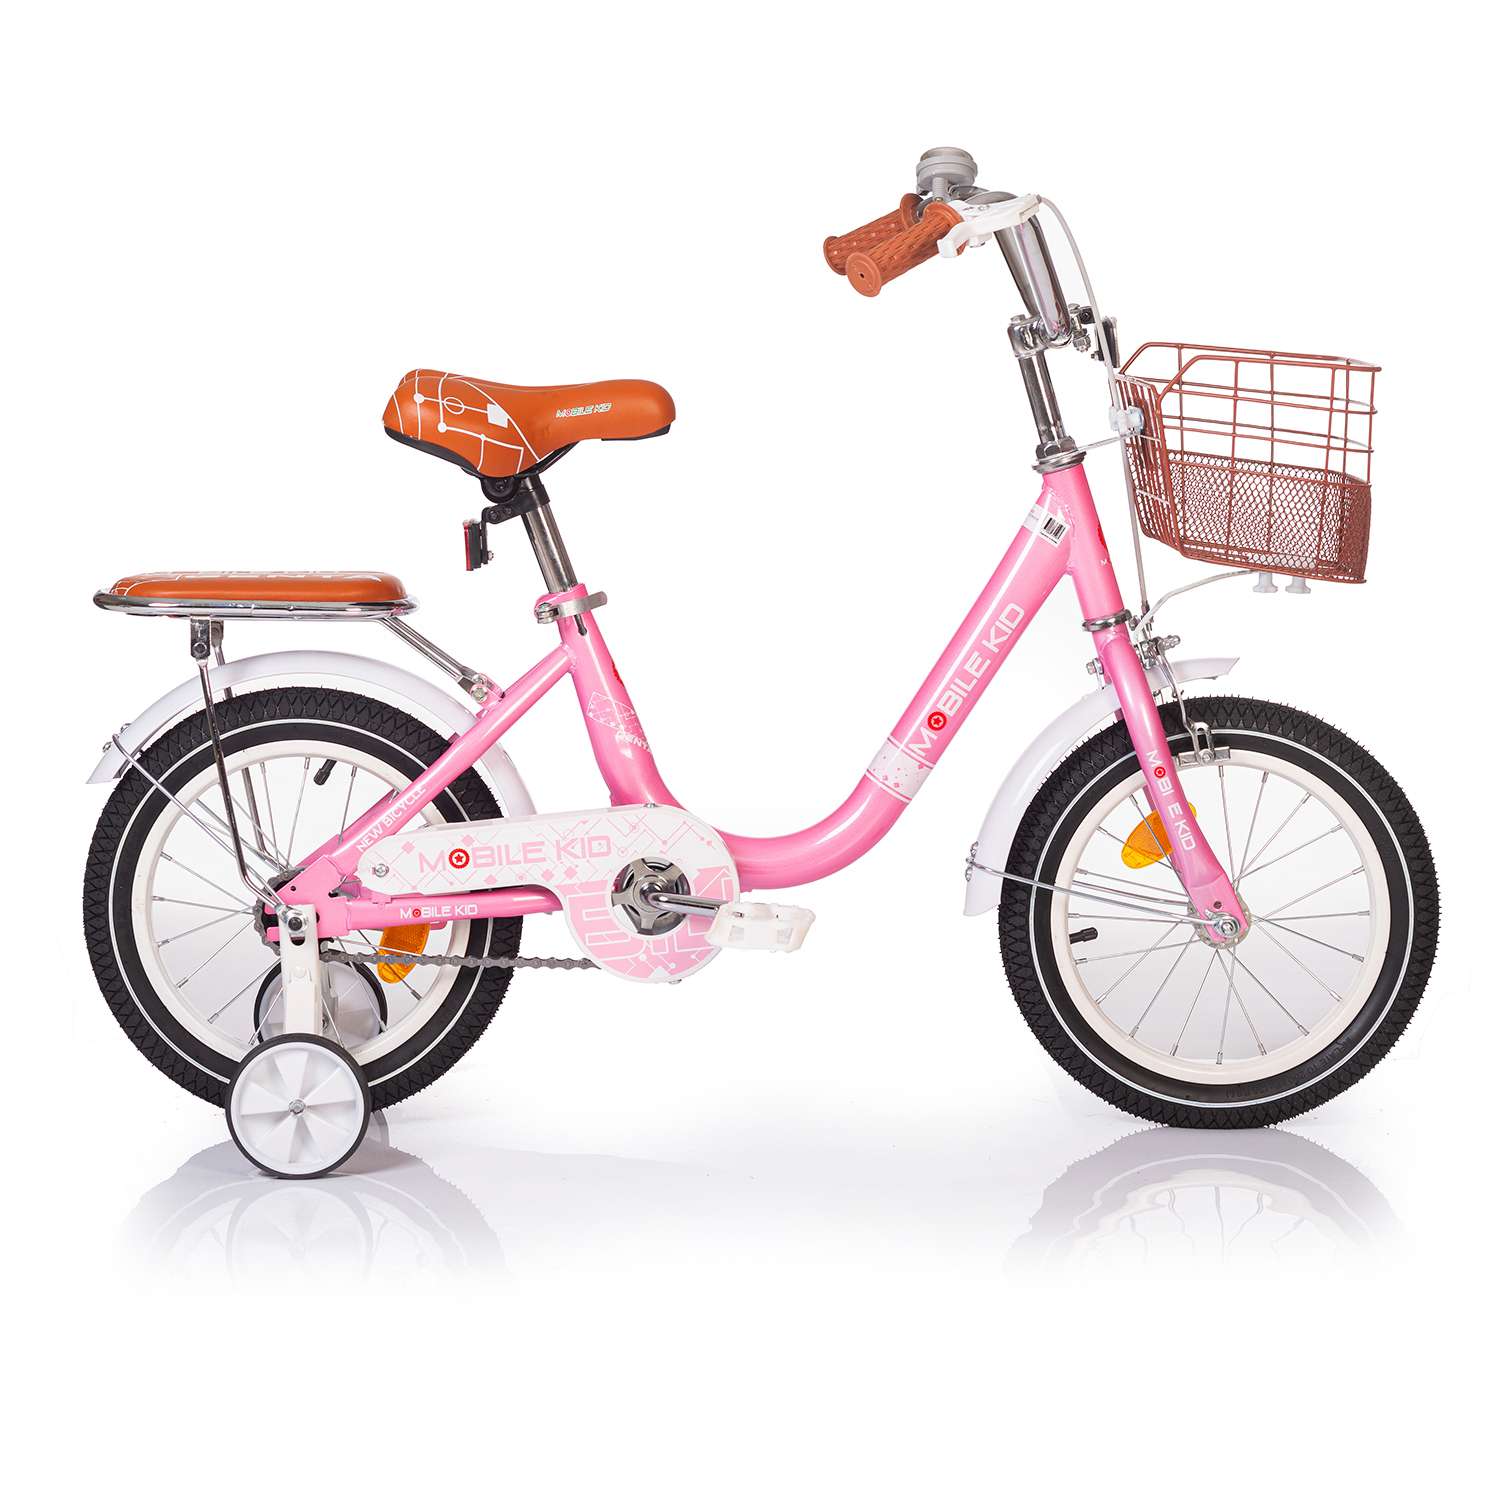 Велосипед детский Mobile Kid Genta 14 - фото 2